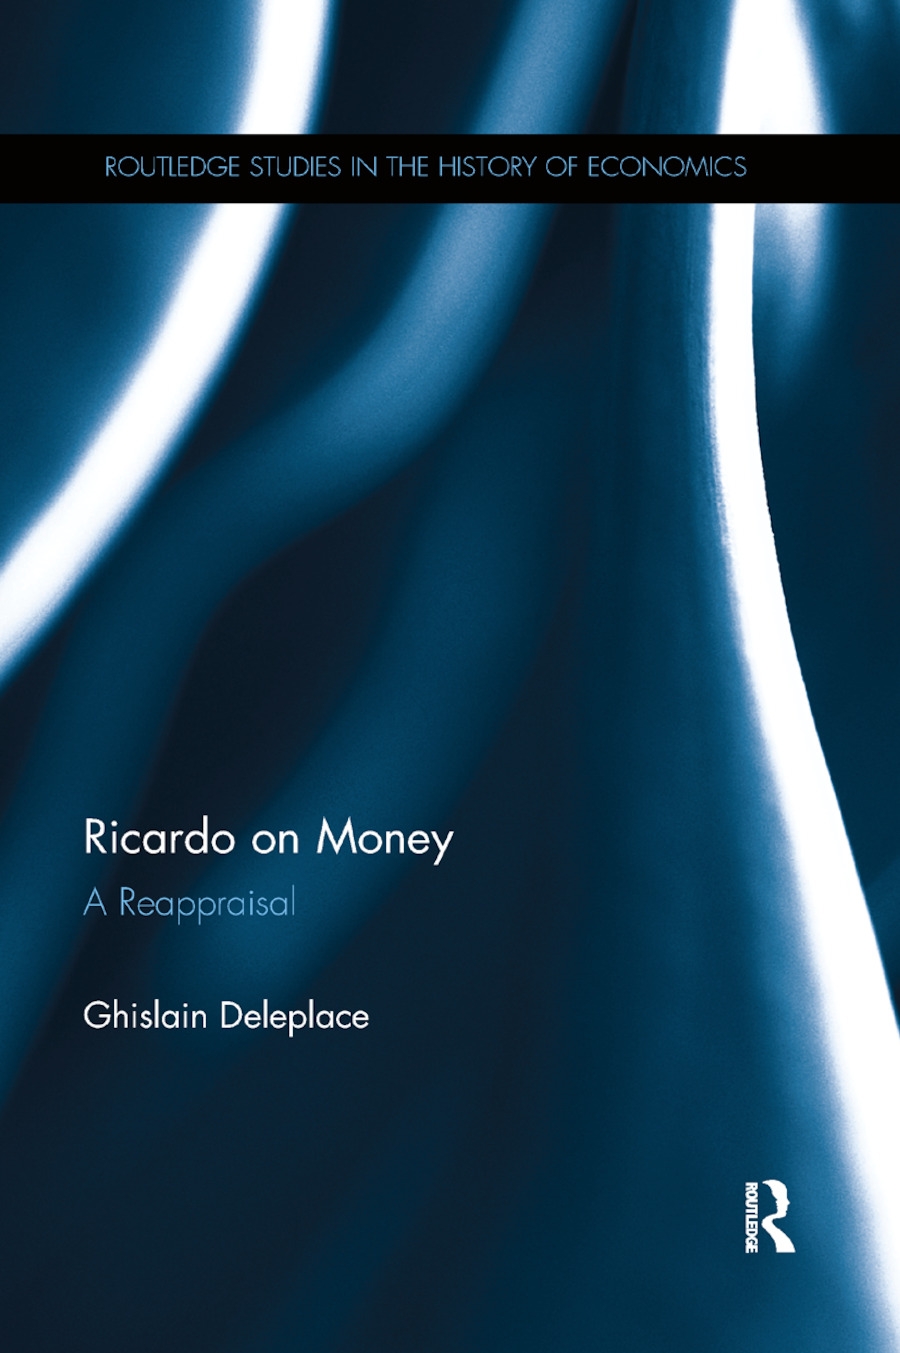 Ricardo on Money: A Reappraisal